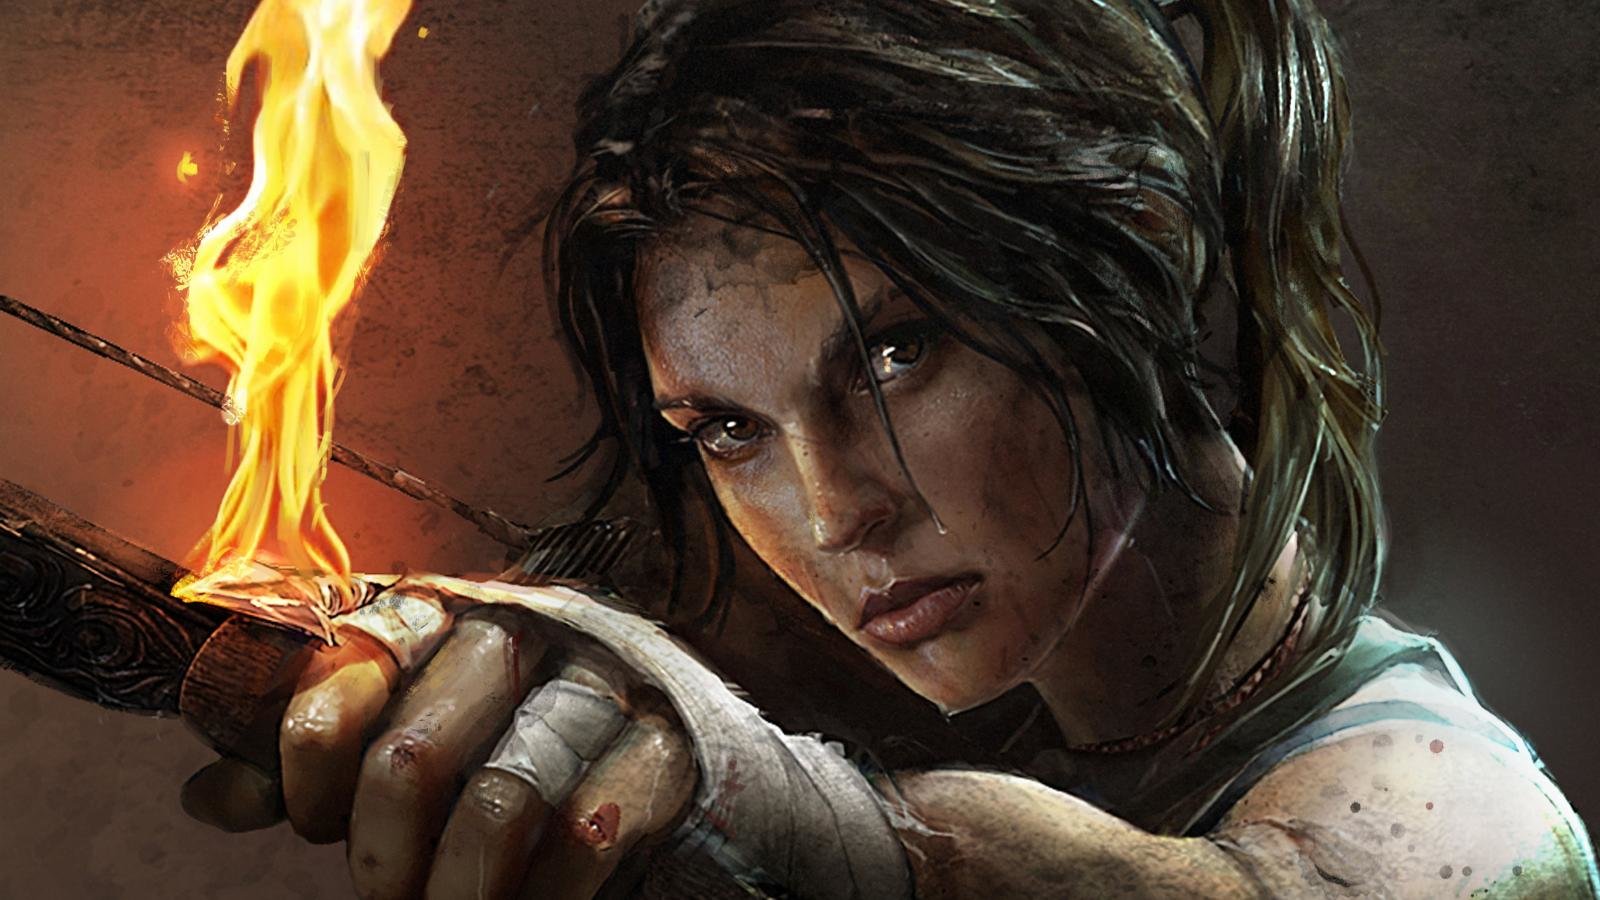 Best Tomb Raider (Lara Croft) background ID:437183 for High Resolution hd 1600x900 desktop